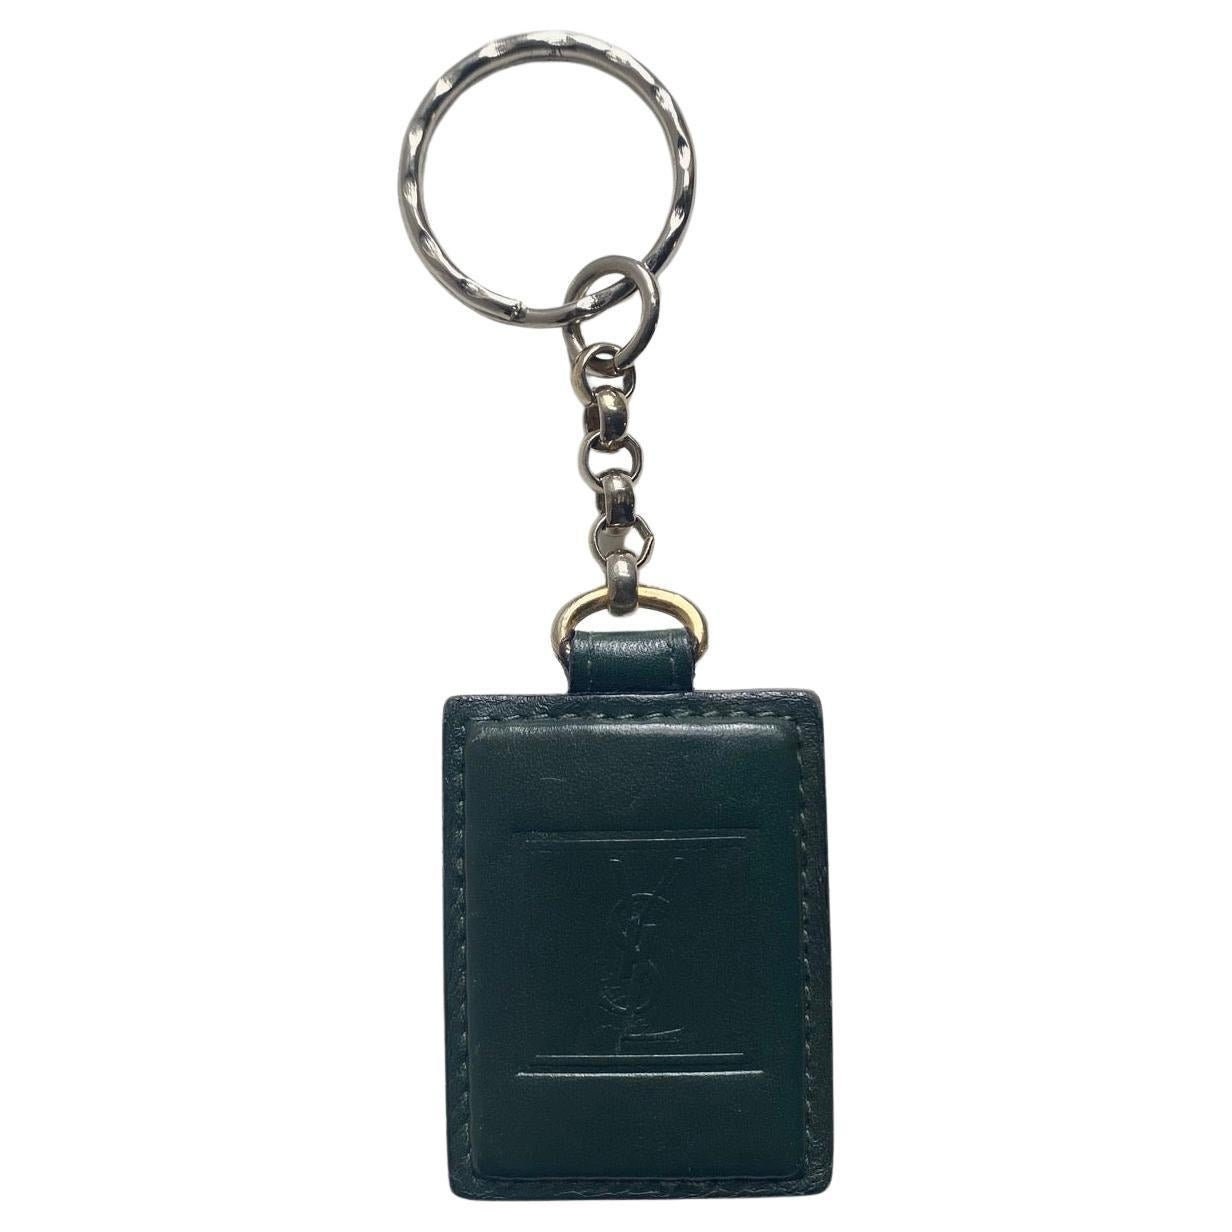 Saint Laurent YSL Key Pouch - Green Bag Accessories, Accessories -  SNT262108